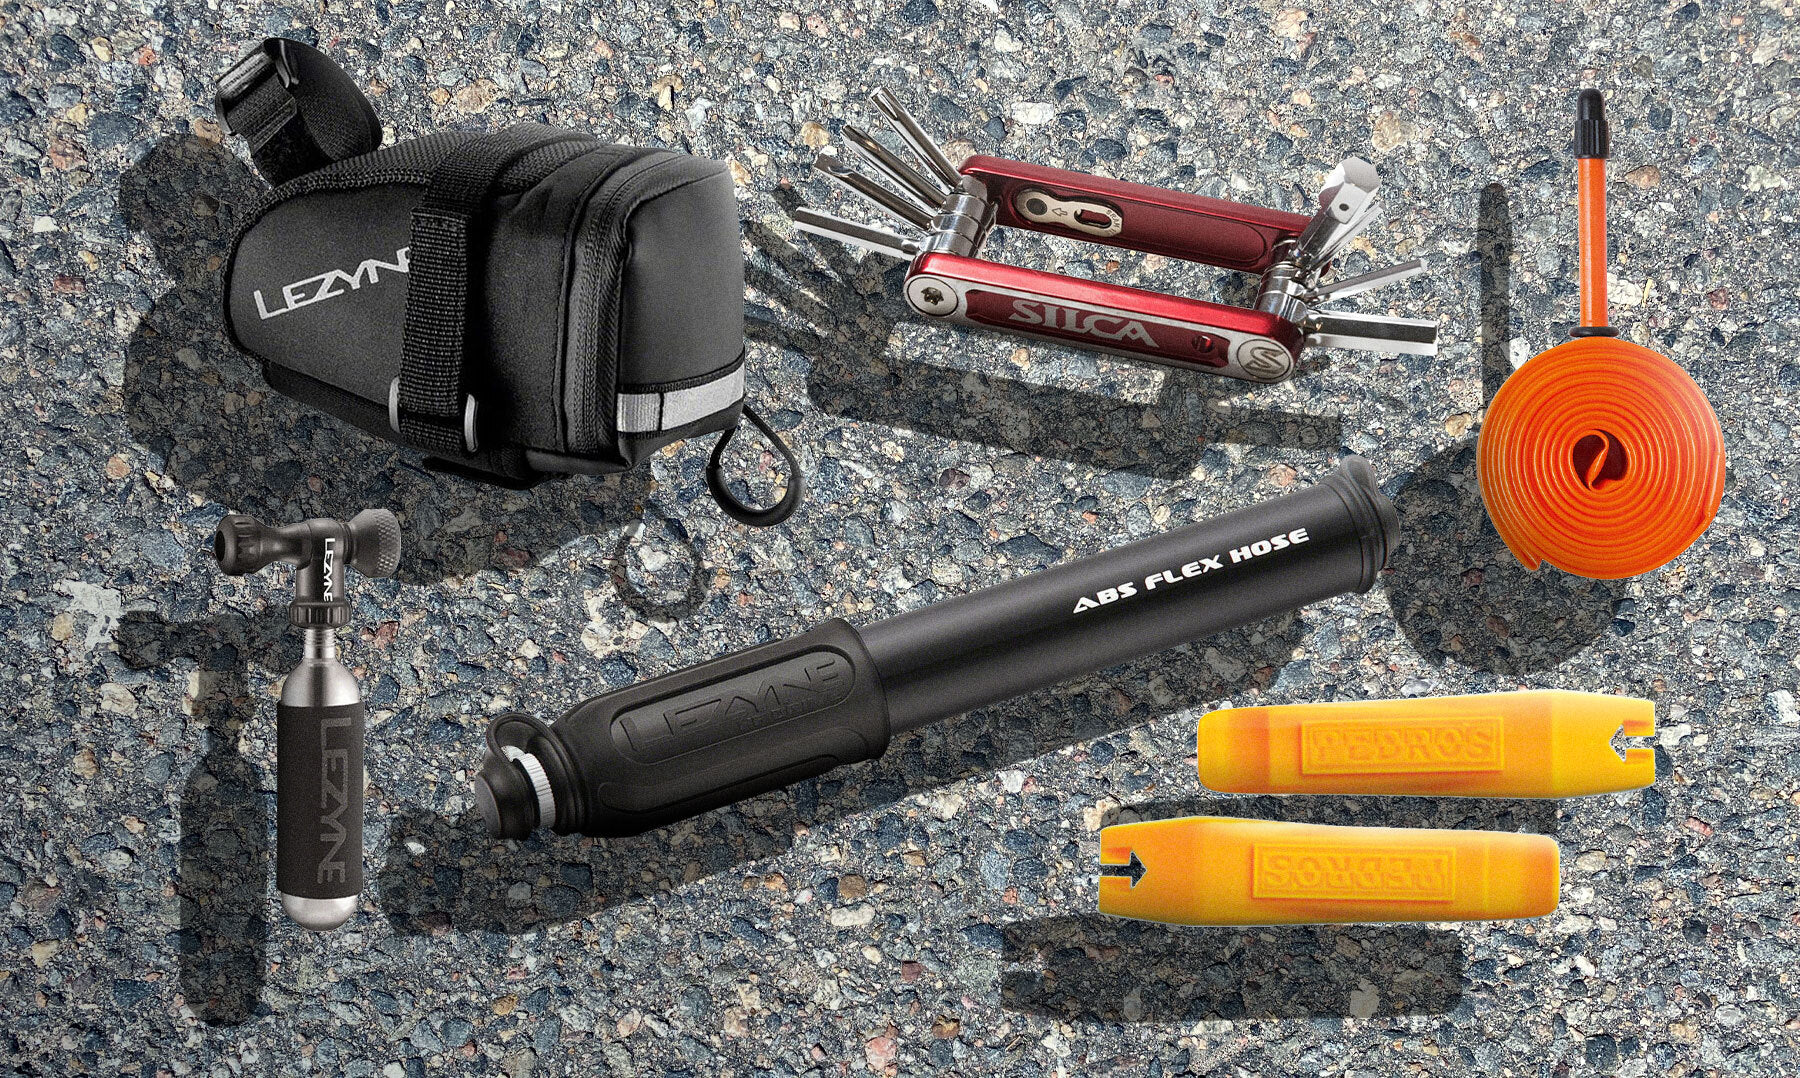 Road Bike flat tire repair essential tools, spares, and gear